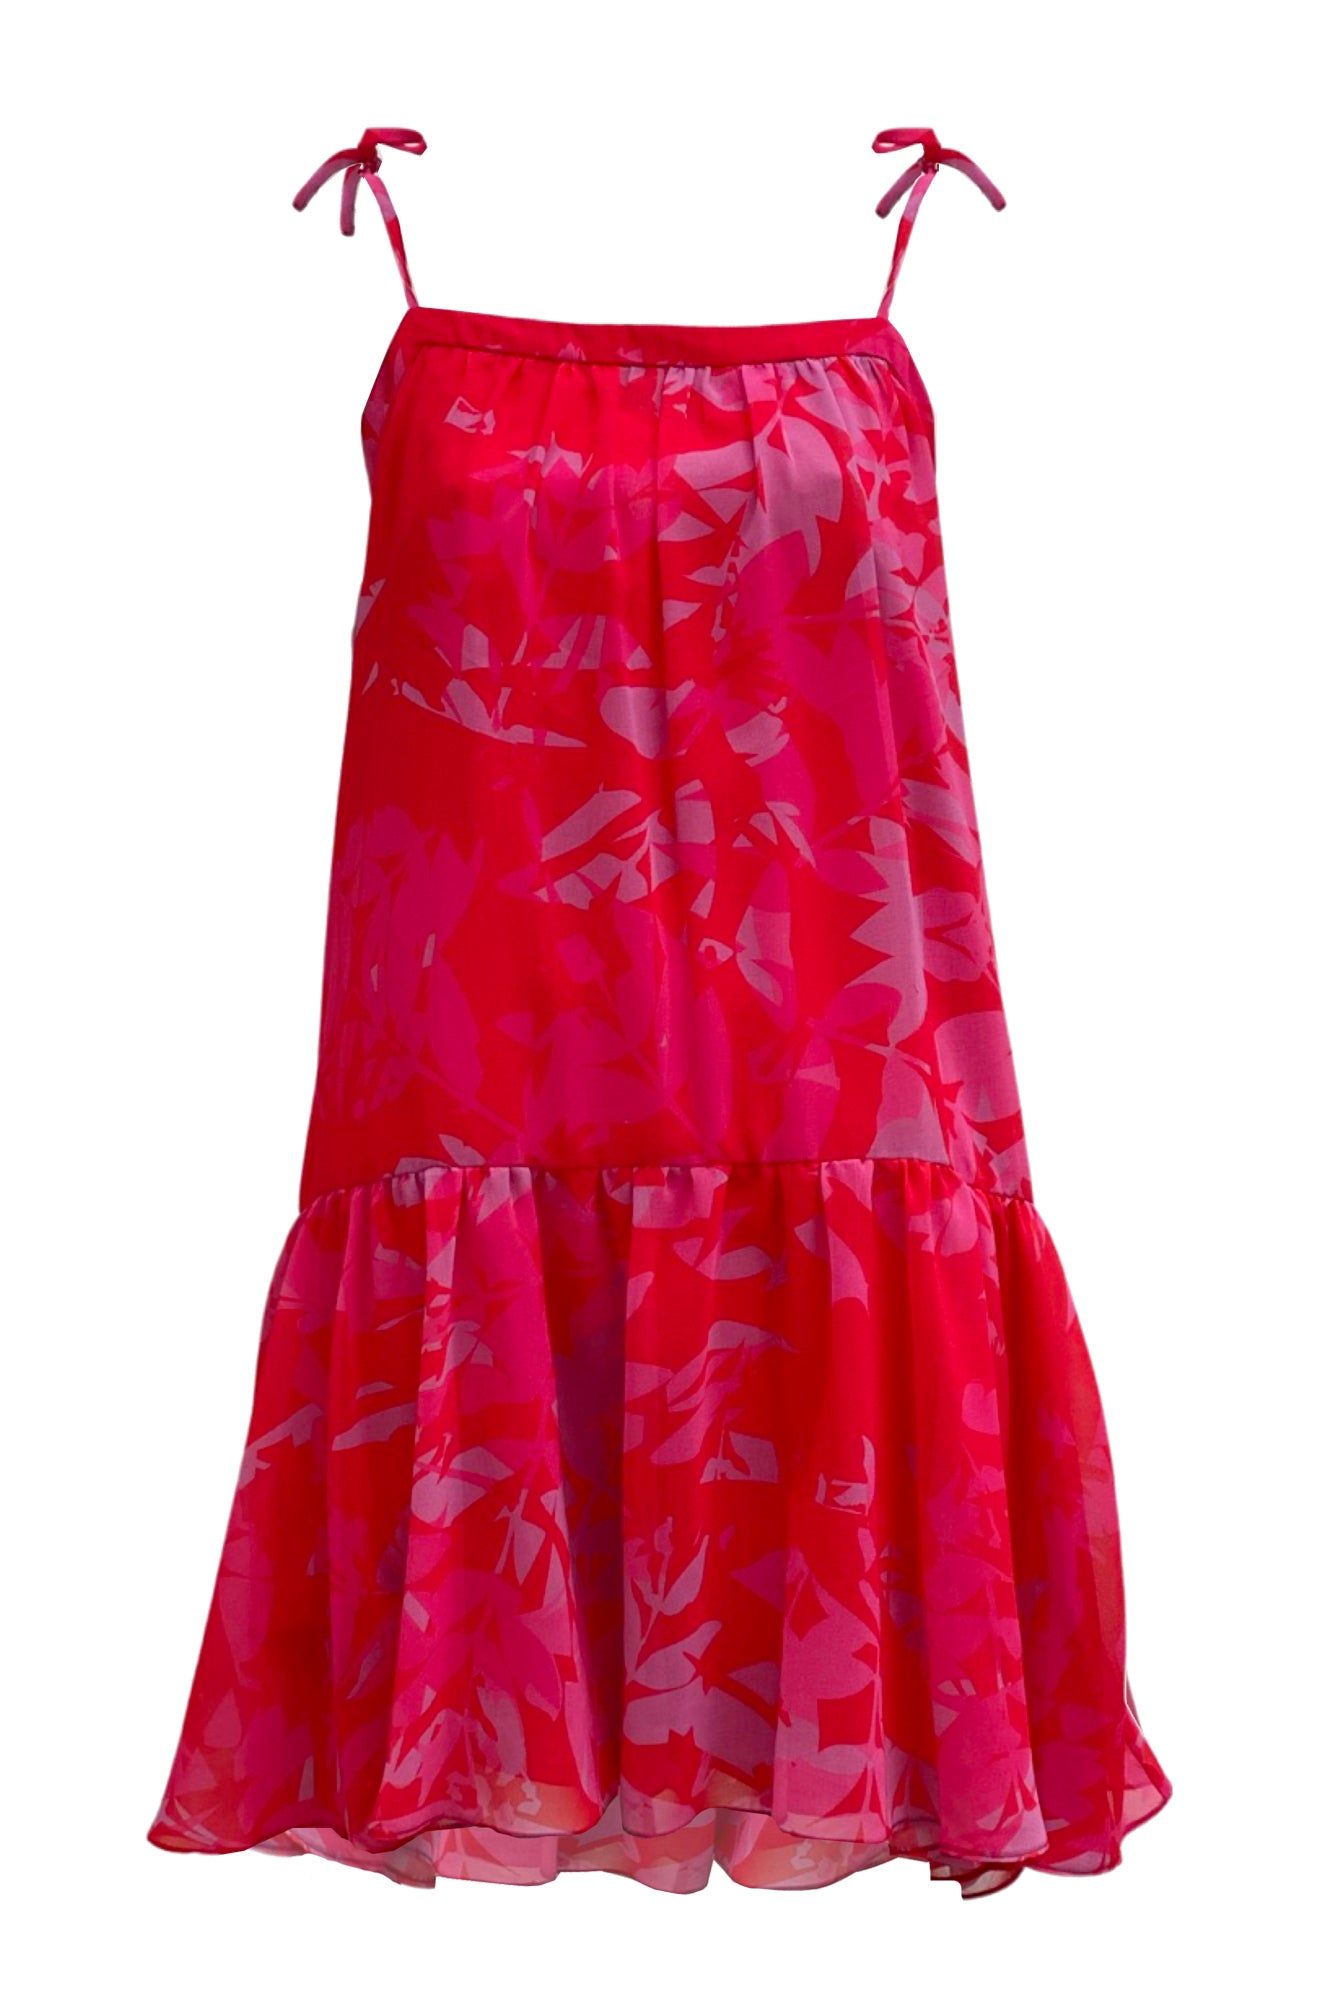 Flower Power Short Dress with Ruffle Skirt